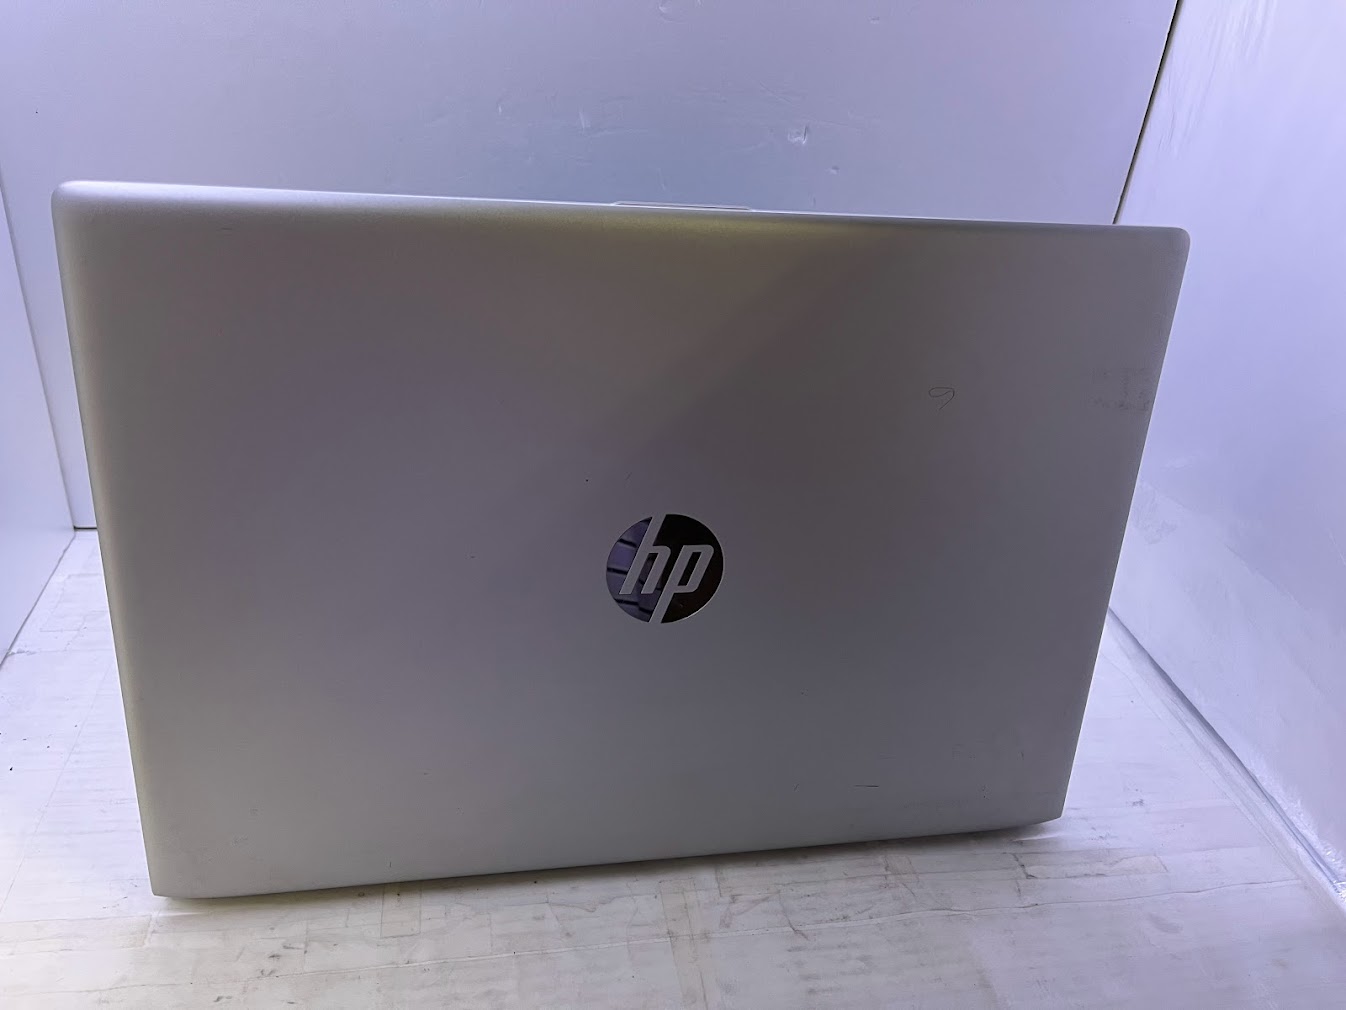 HP(ヒューレットパッカード) ProBook 450 G5の激安通販 - パソコン